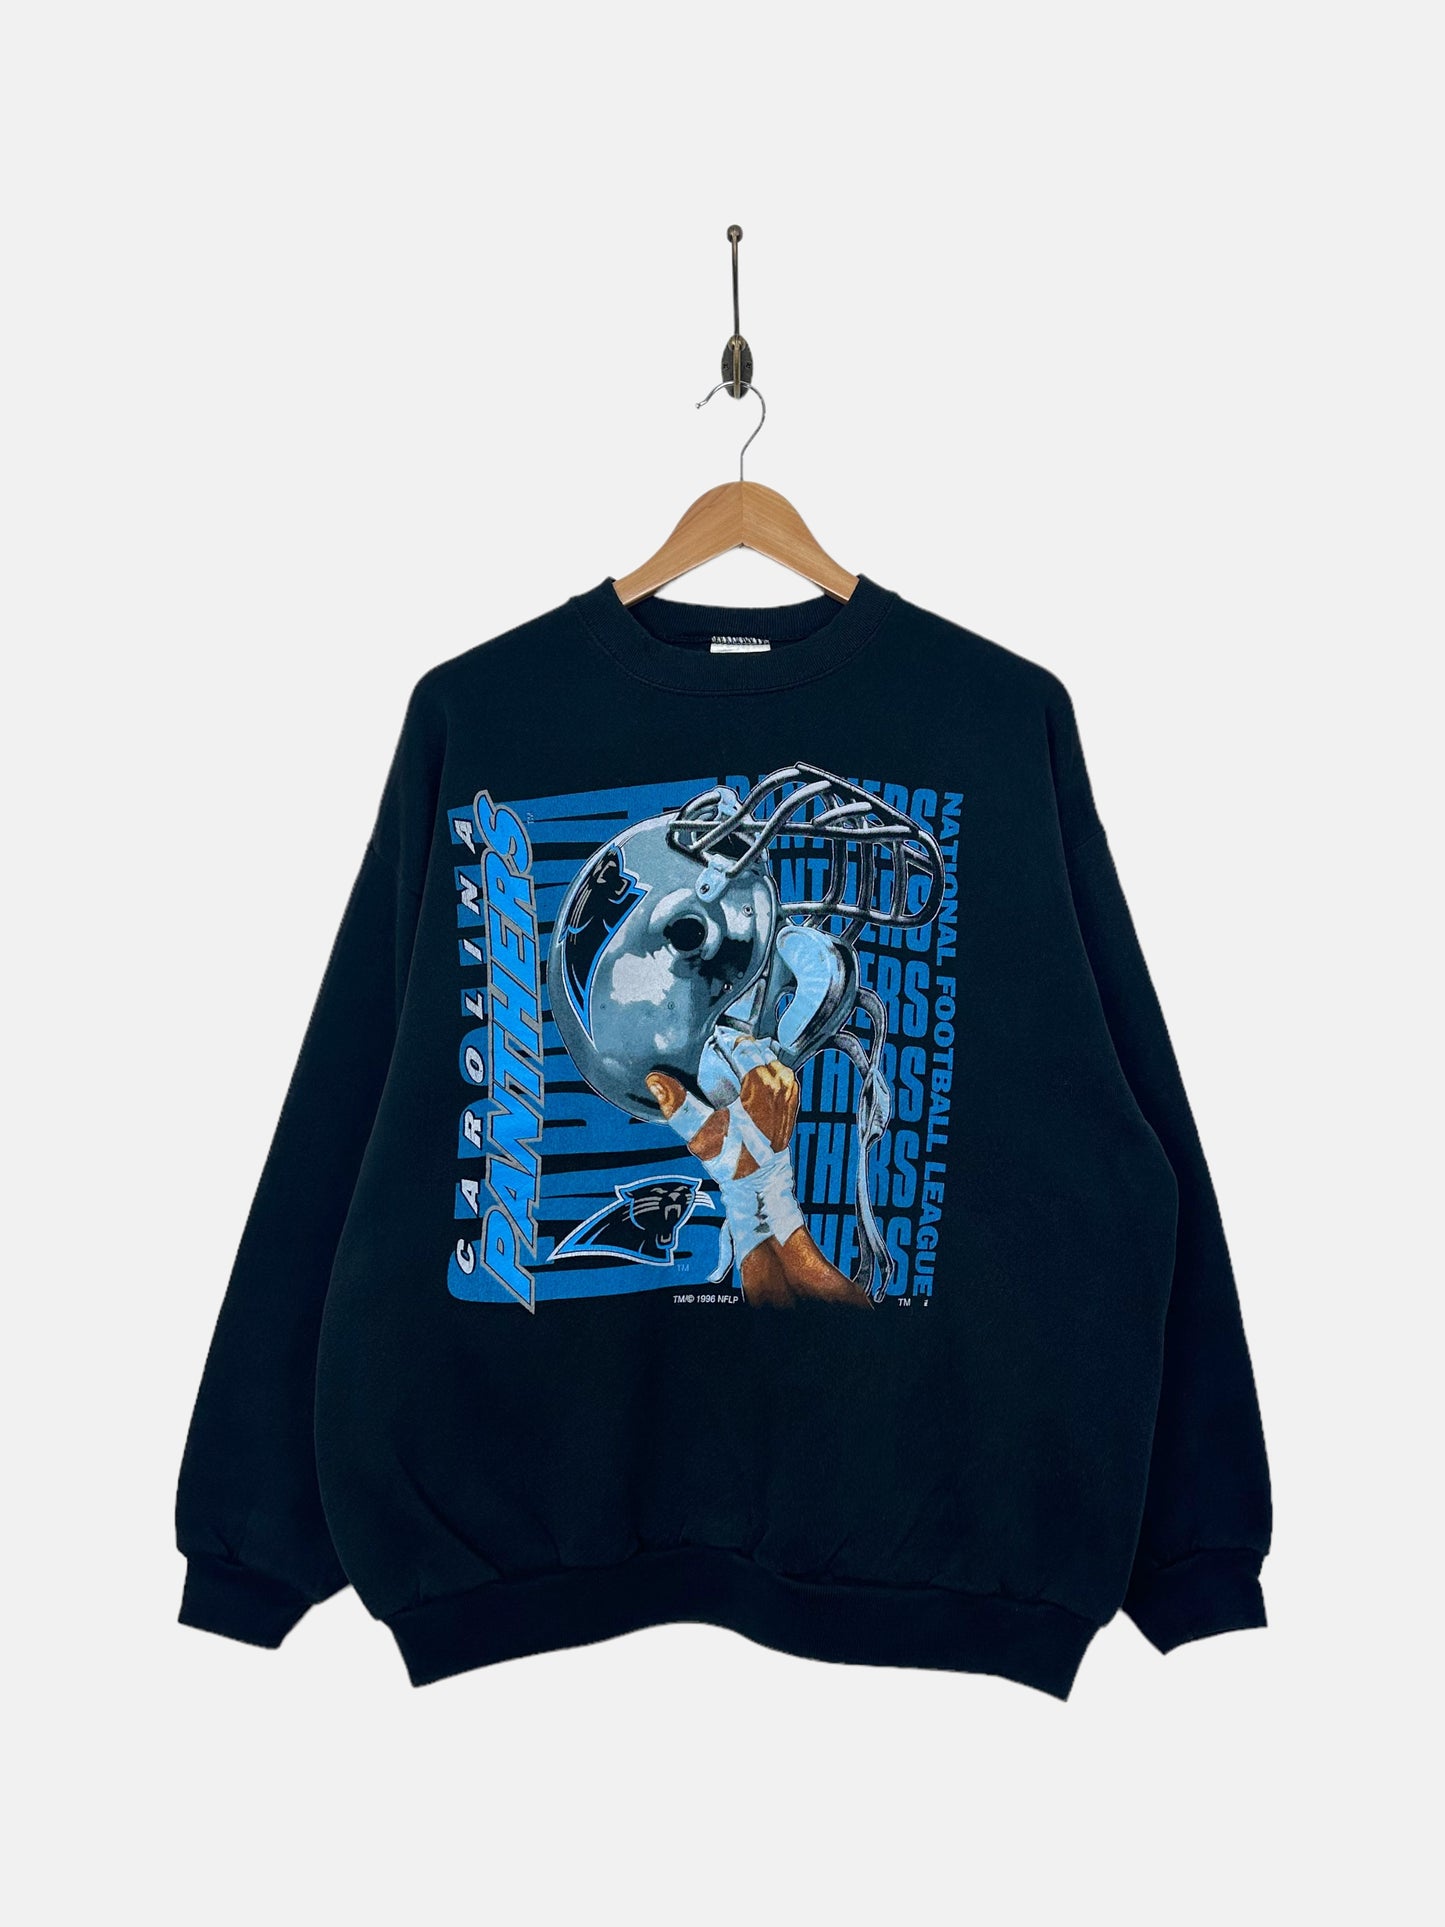 1996 Carolina Panthers NFL Vintage Sweatshirt Size S-M